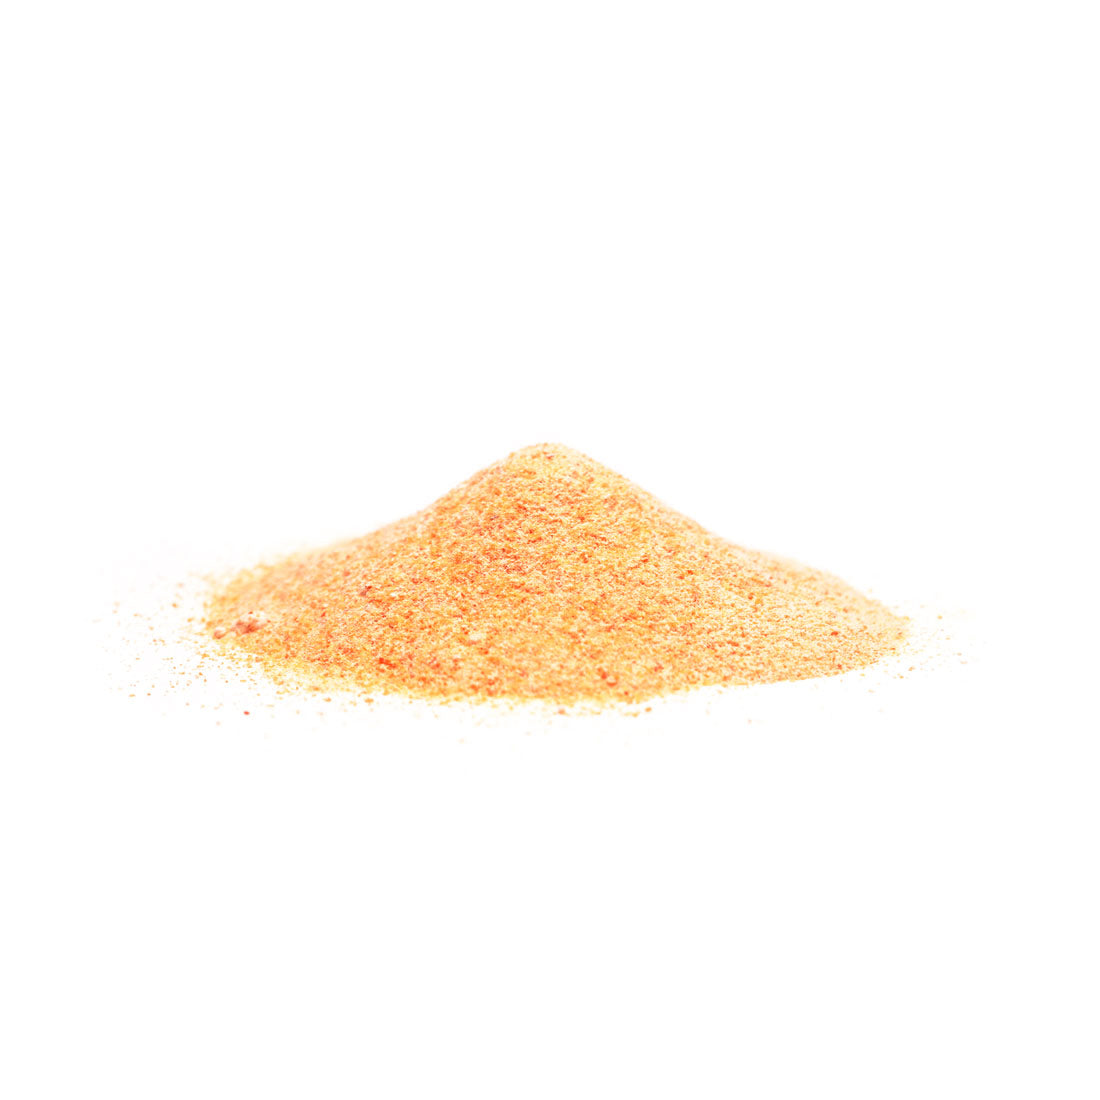 Orange powder